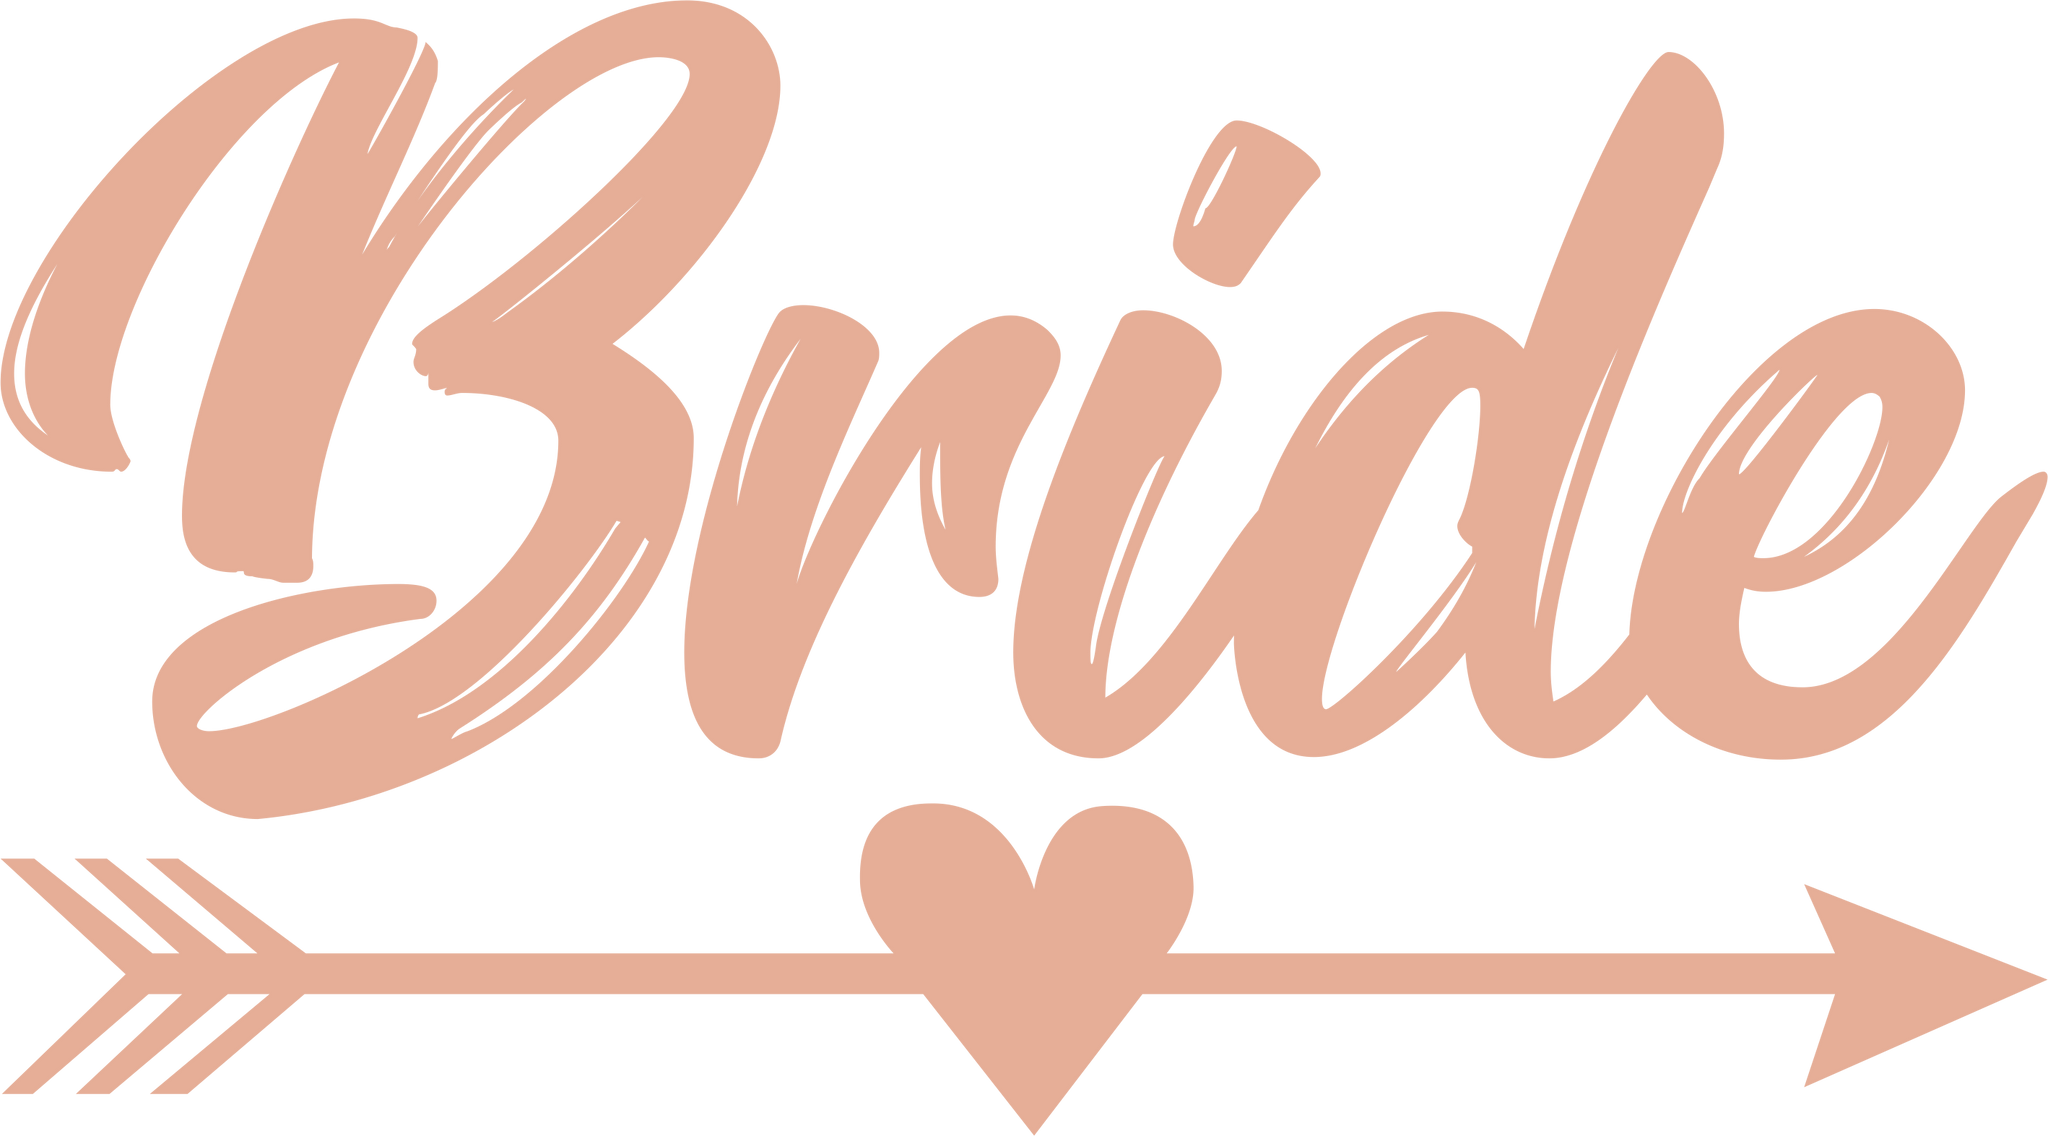 Bride's The Word